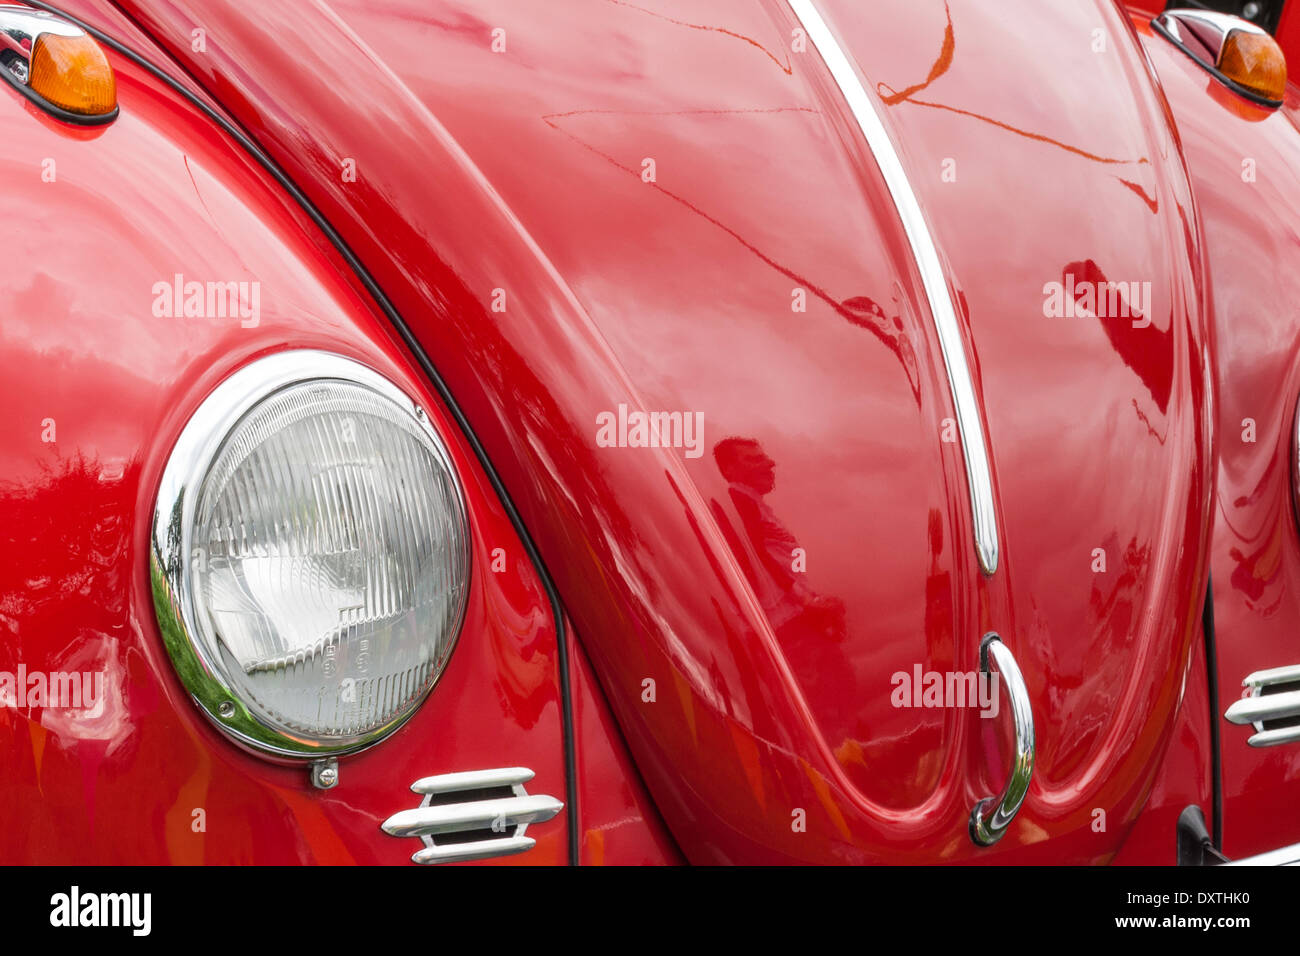 Red Volkswagen Beetle front view. Stock Photo